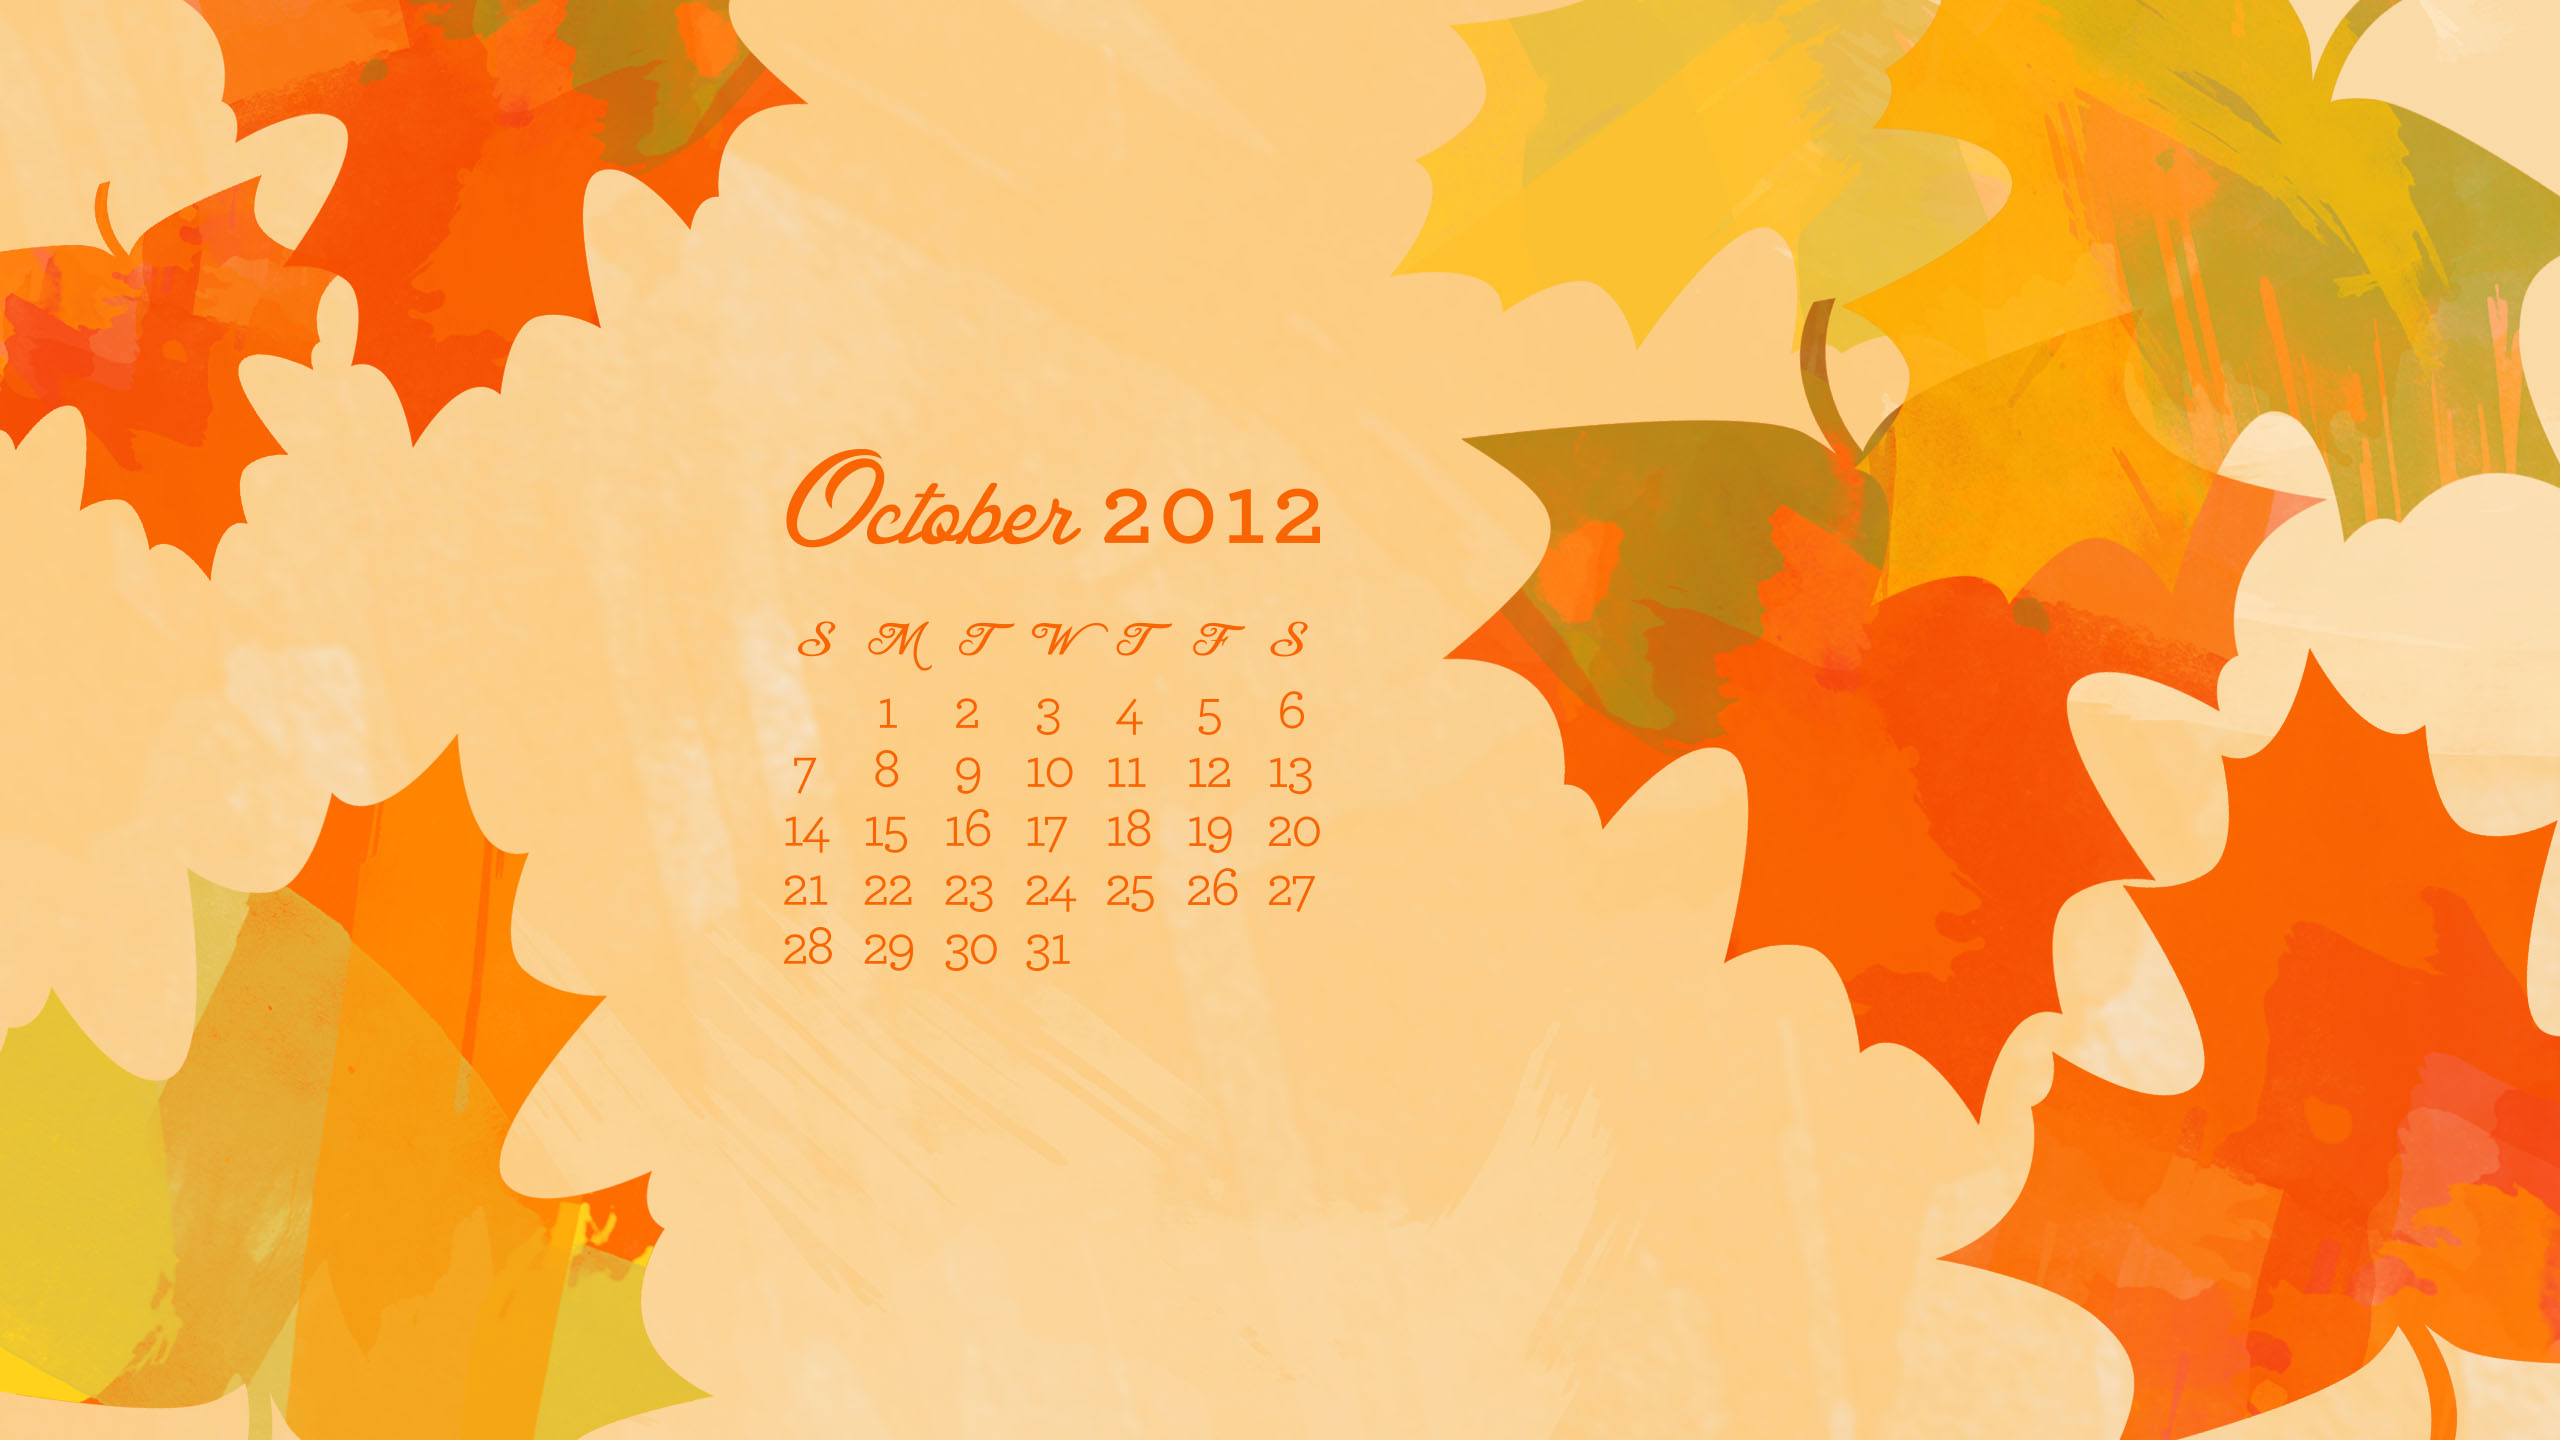 October 2012 Desktop iPhone iPad Calendar Wallpaper   Sarah Hearts